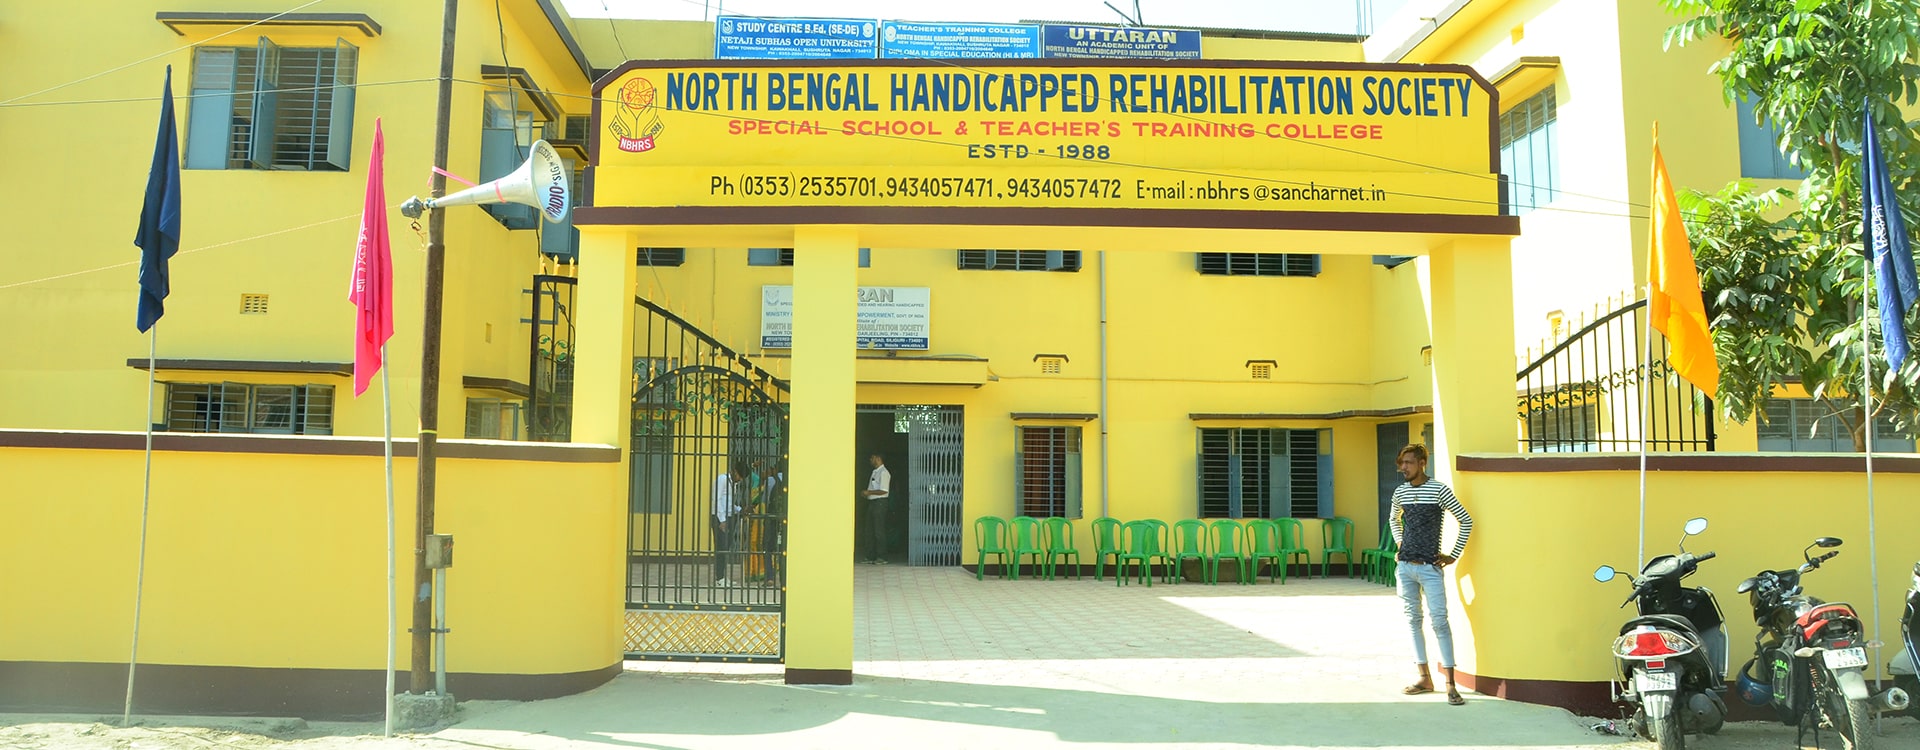 North Bengal Handicapped Rehabilitation Society